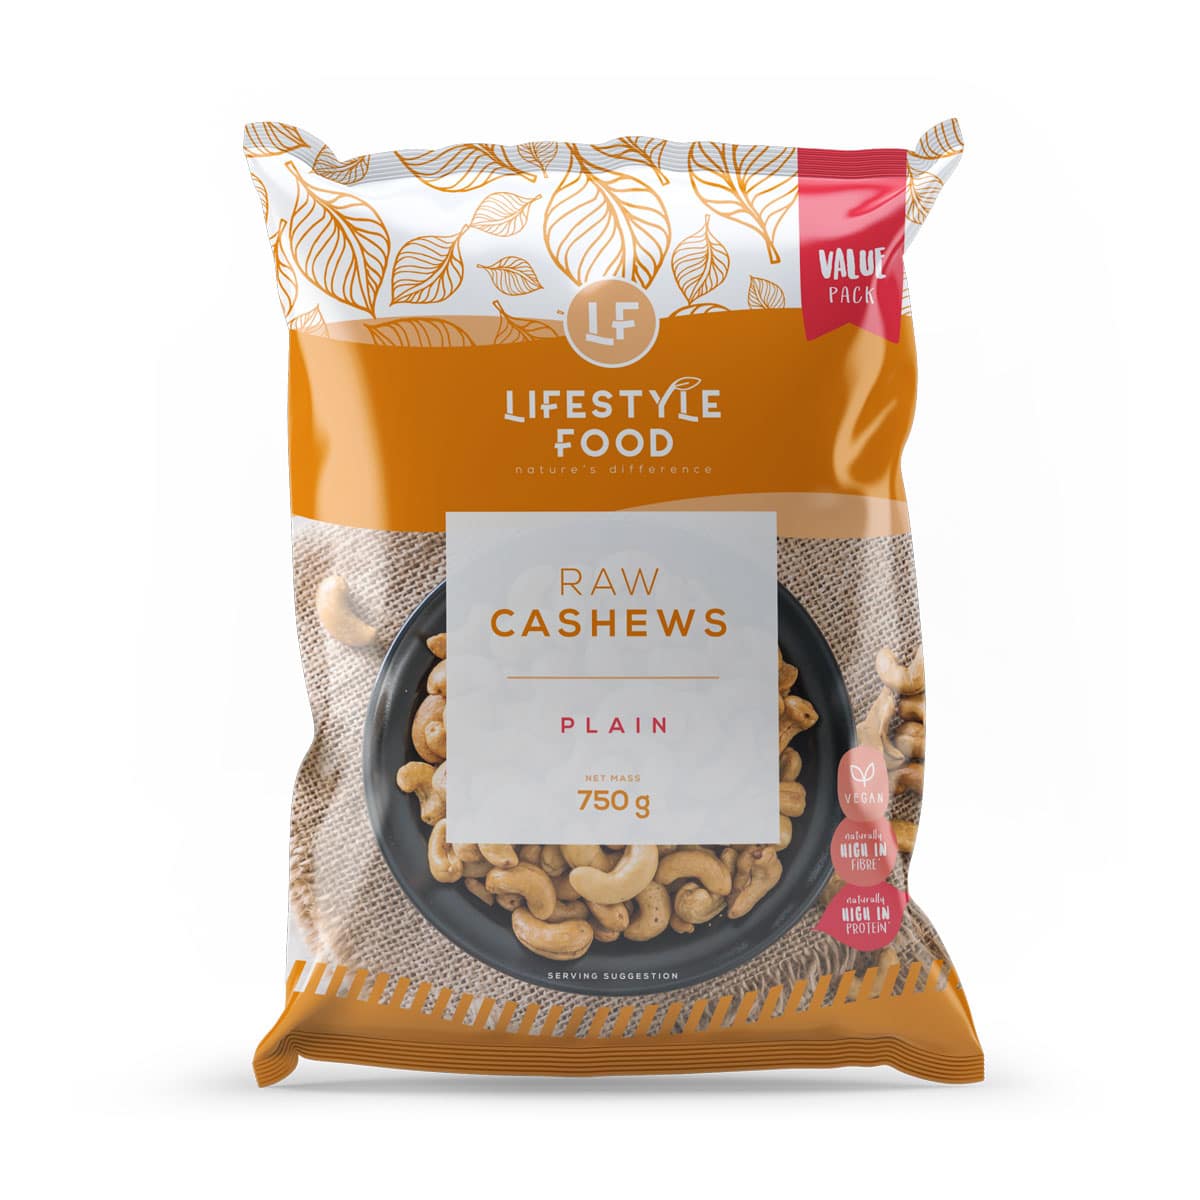 Lifestyle Food Raw Cashews Value Pack - 750g